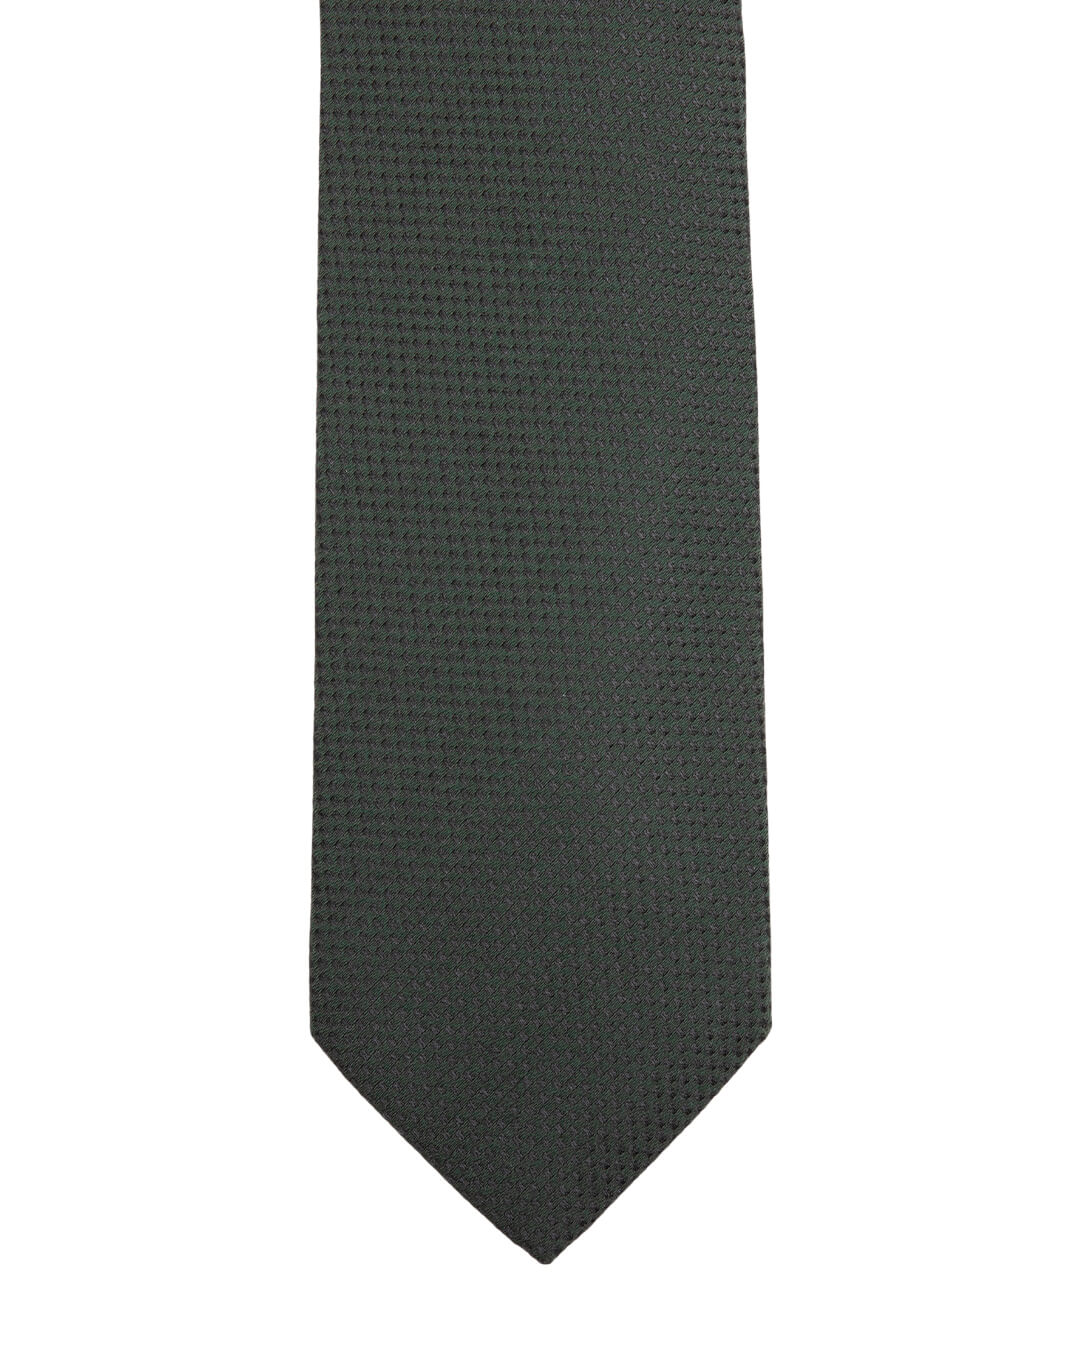 Tie Olive With Dark Grey Spots